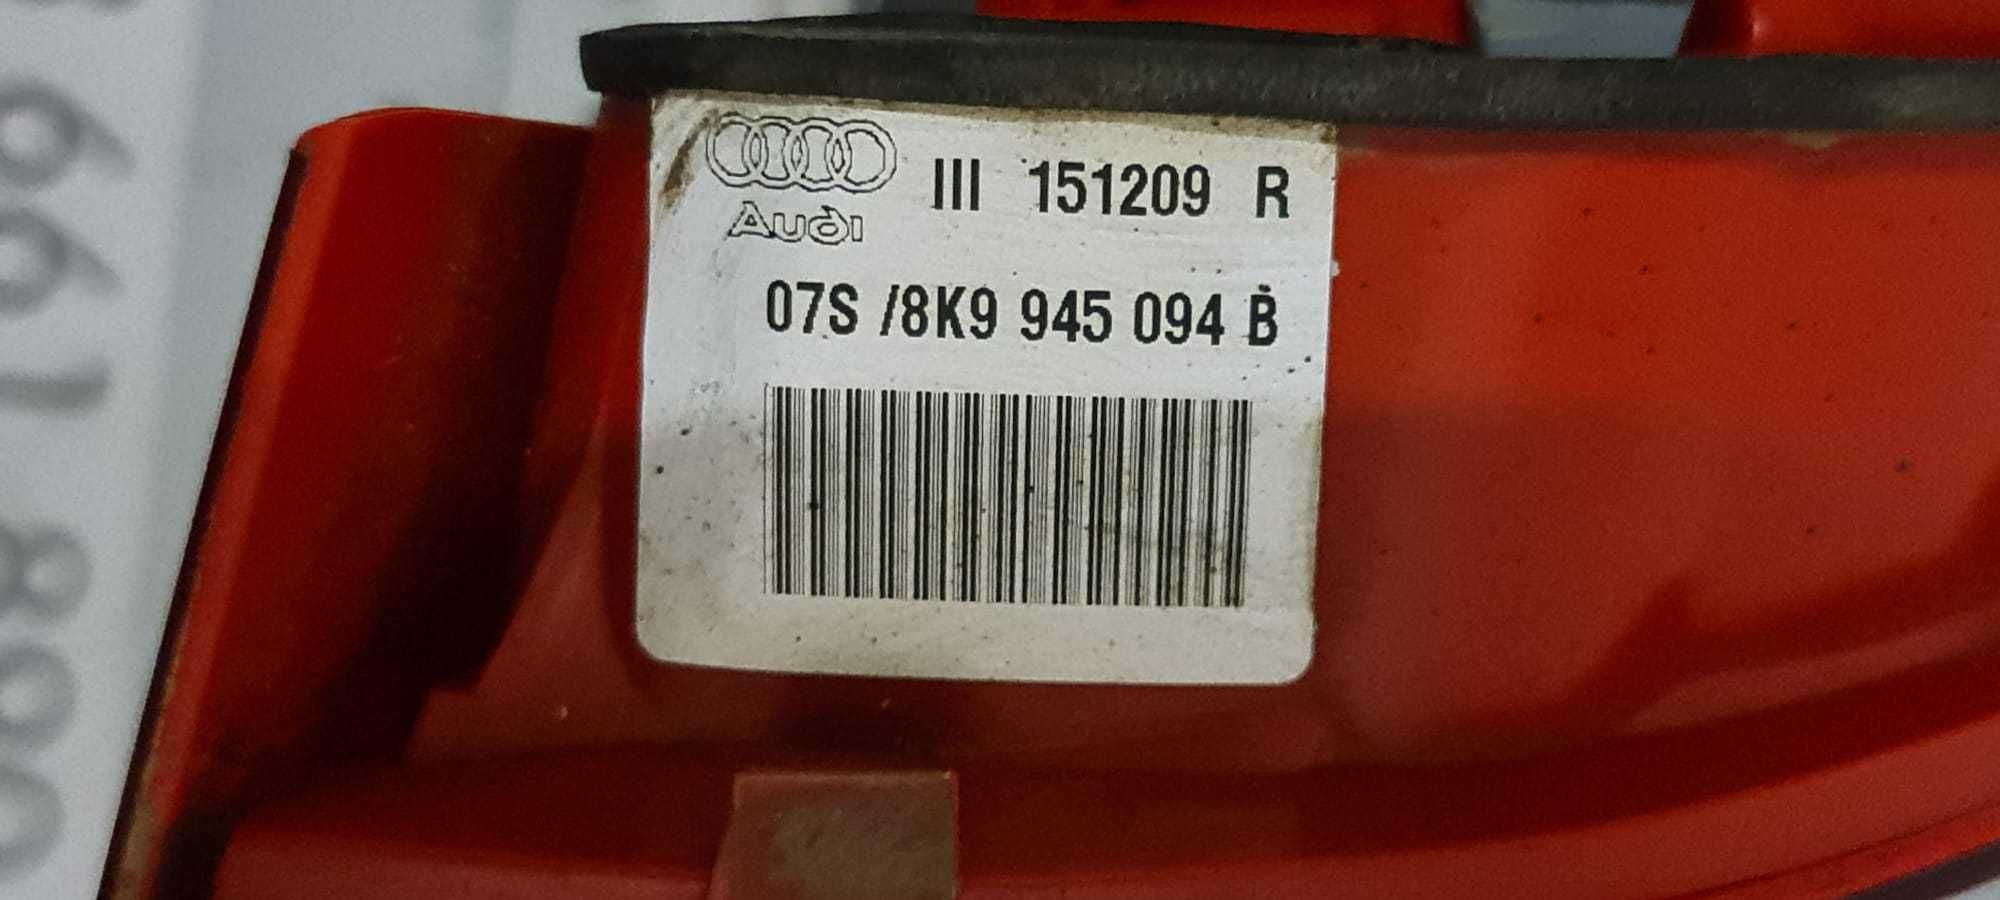 Stop dreapta spate LED Audi A4 B8  AVANT   8K9945094B